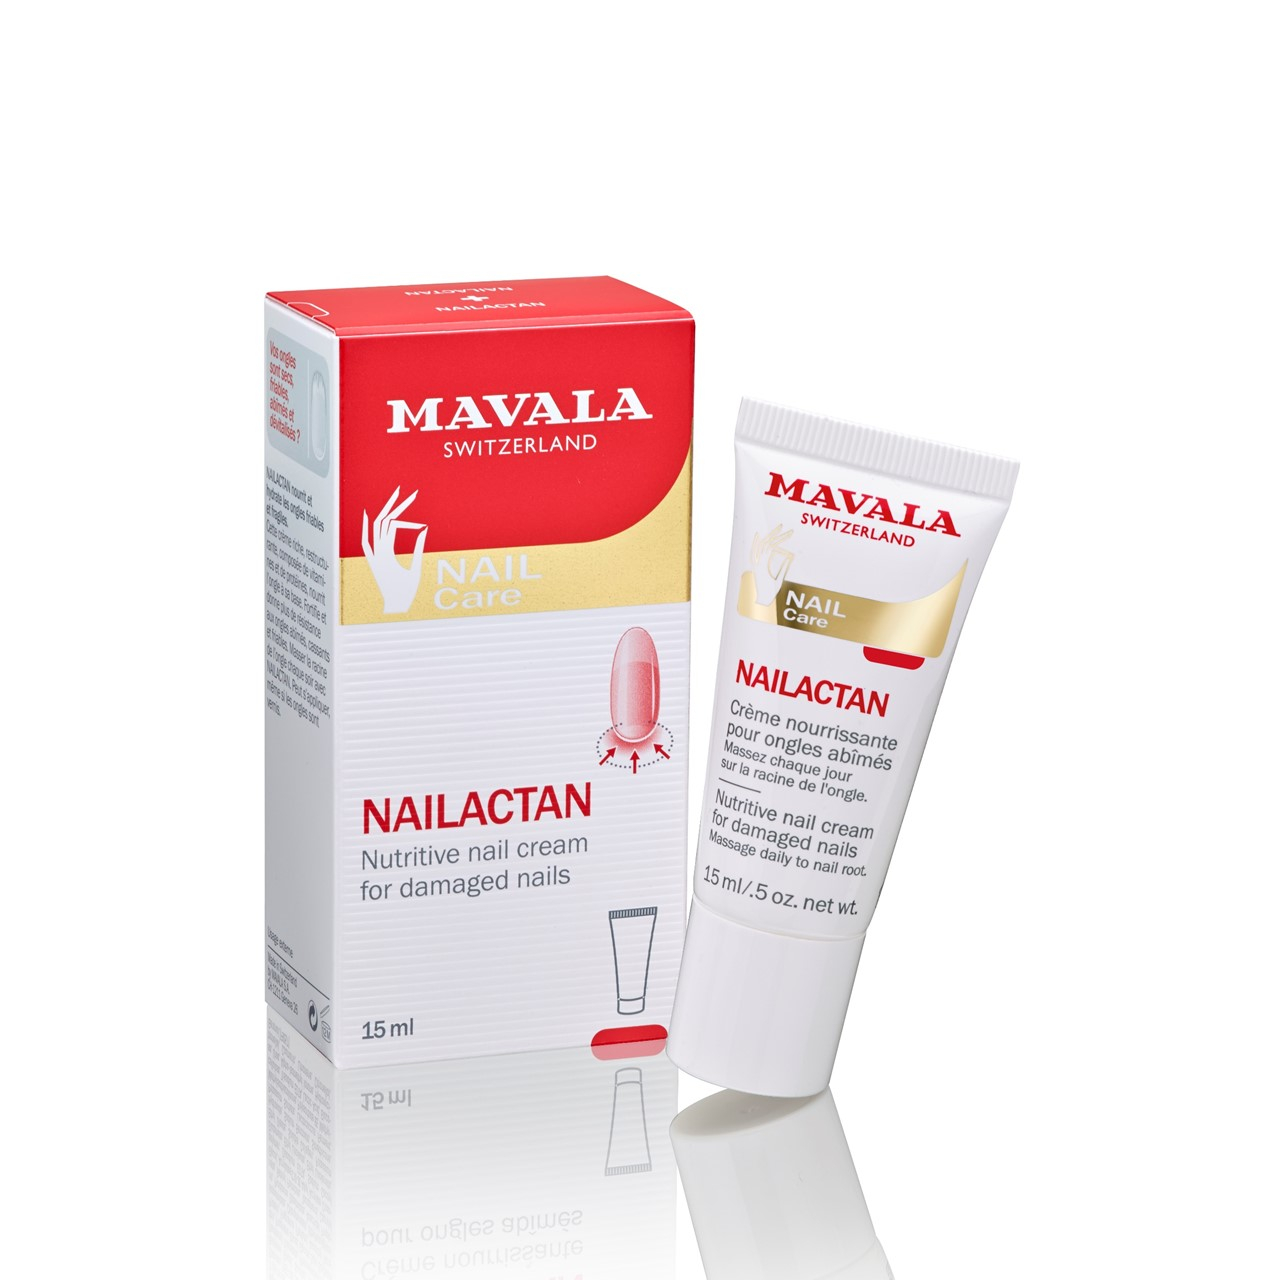 Mavala Nailactan Nutritive Nail Cream 15ml